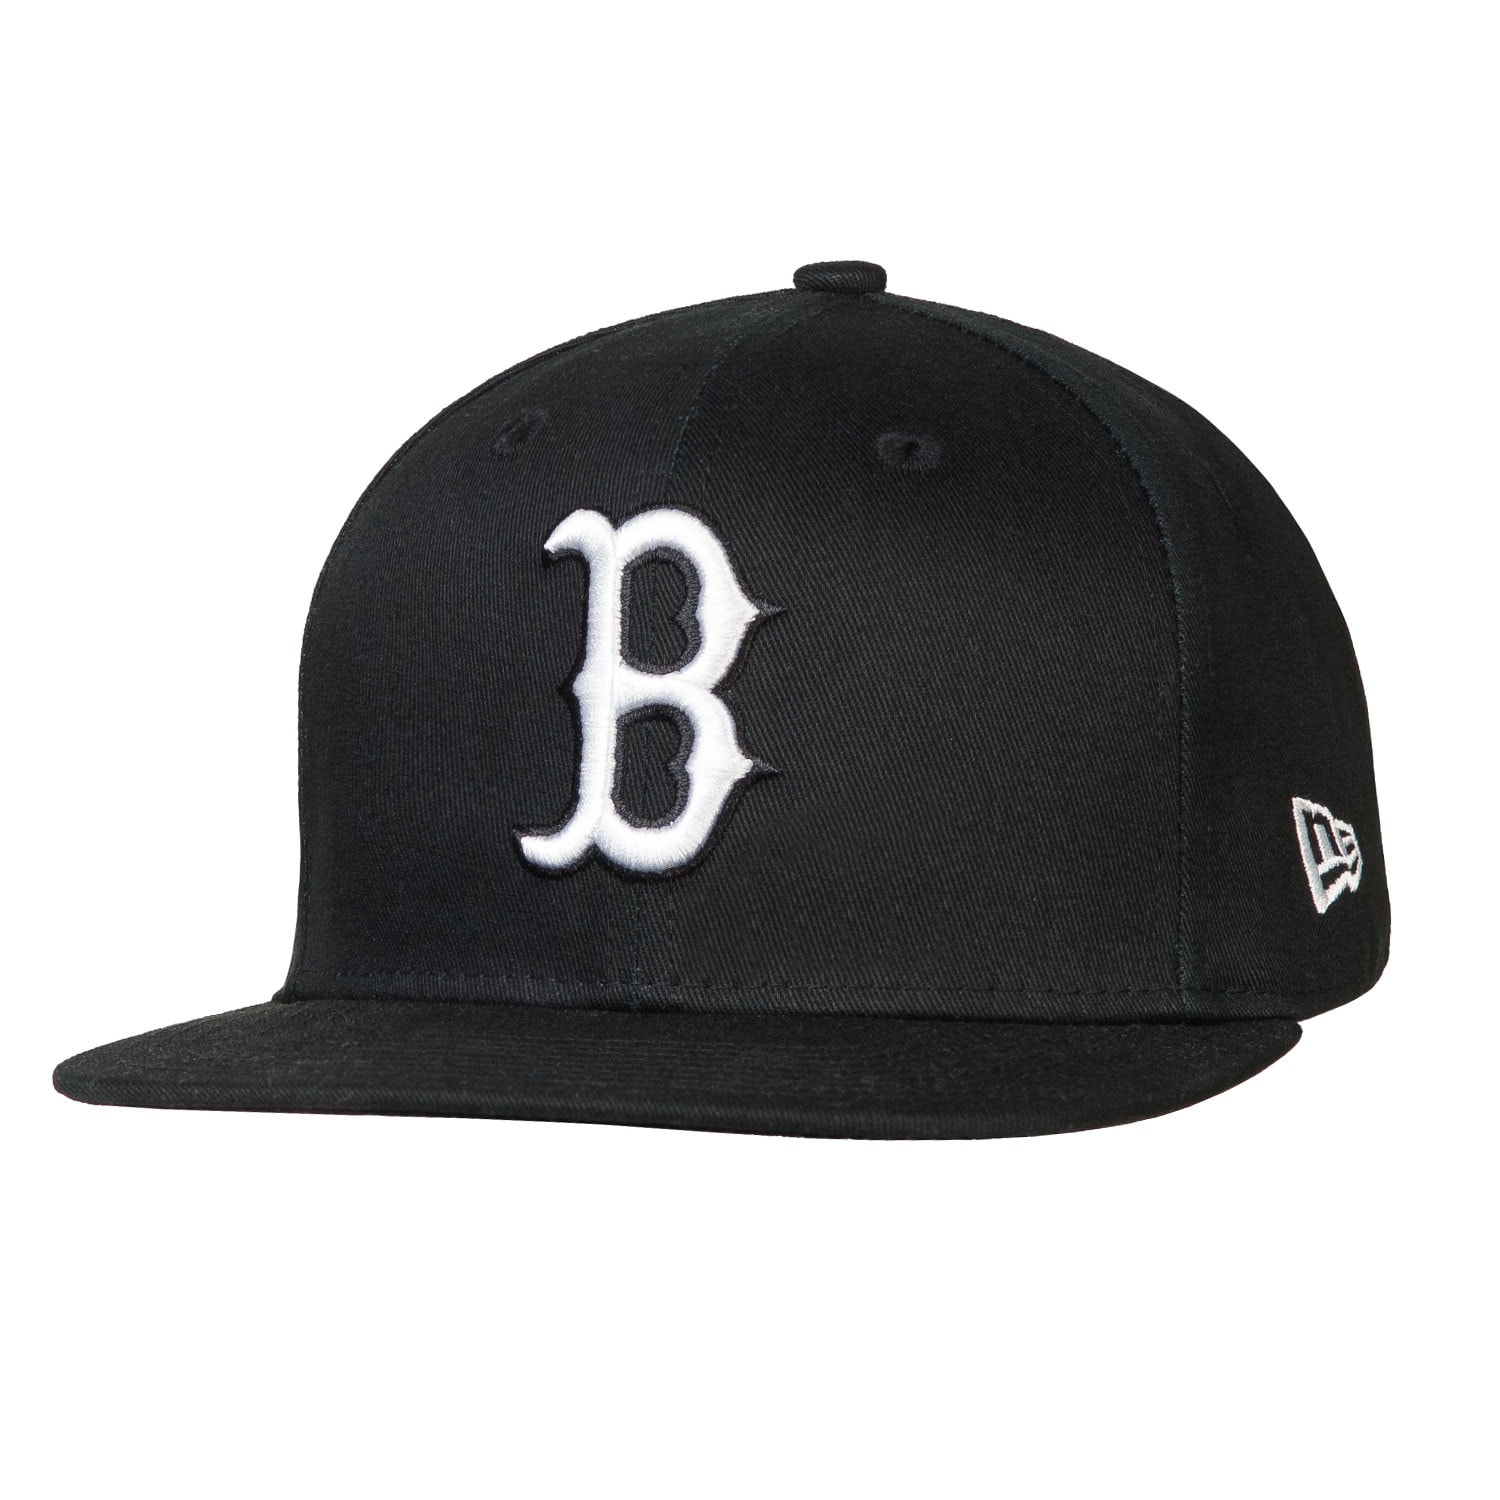 Cap New Era Boston Red Sox 9Fifty Originator black/white